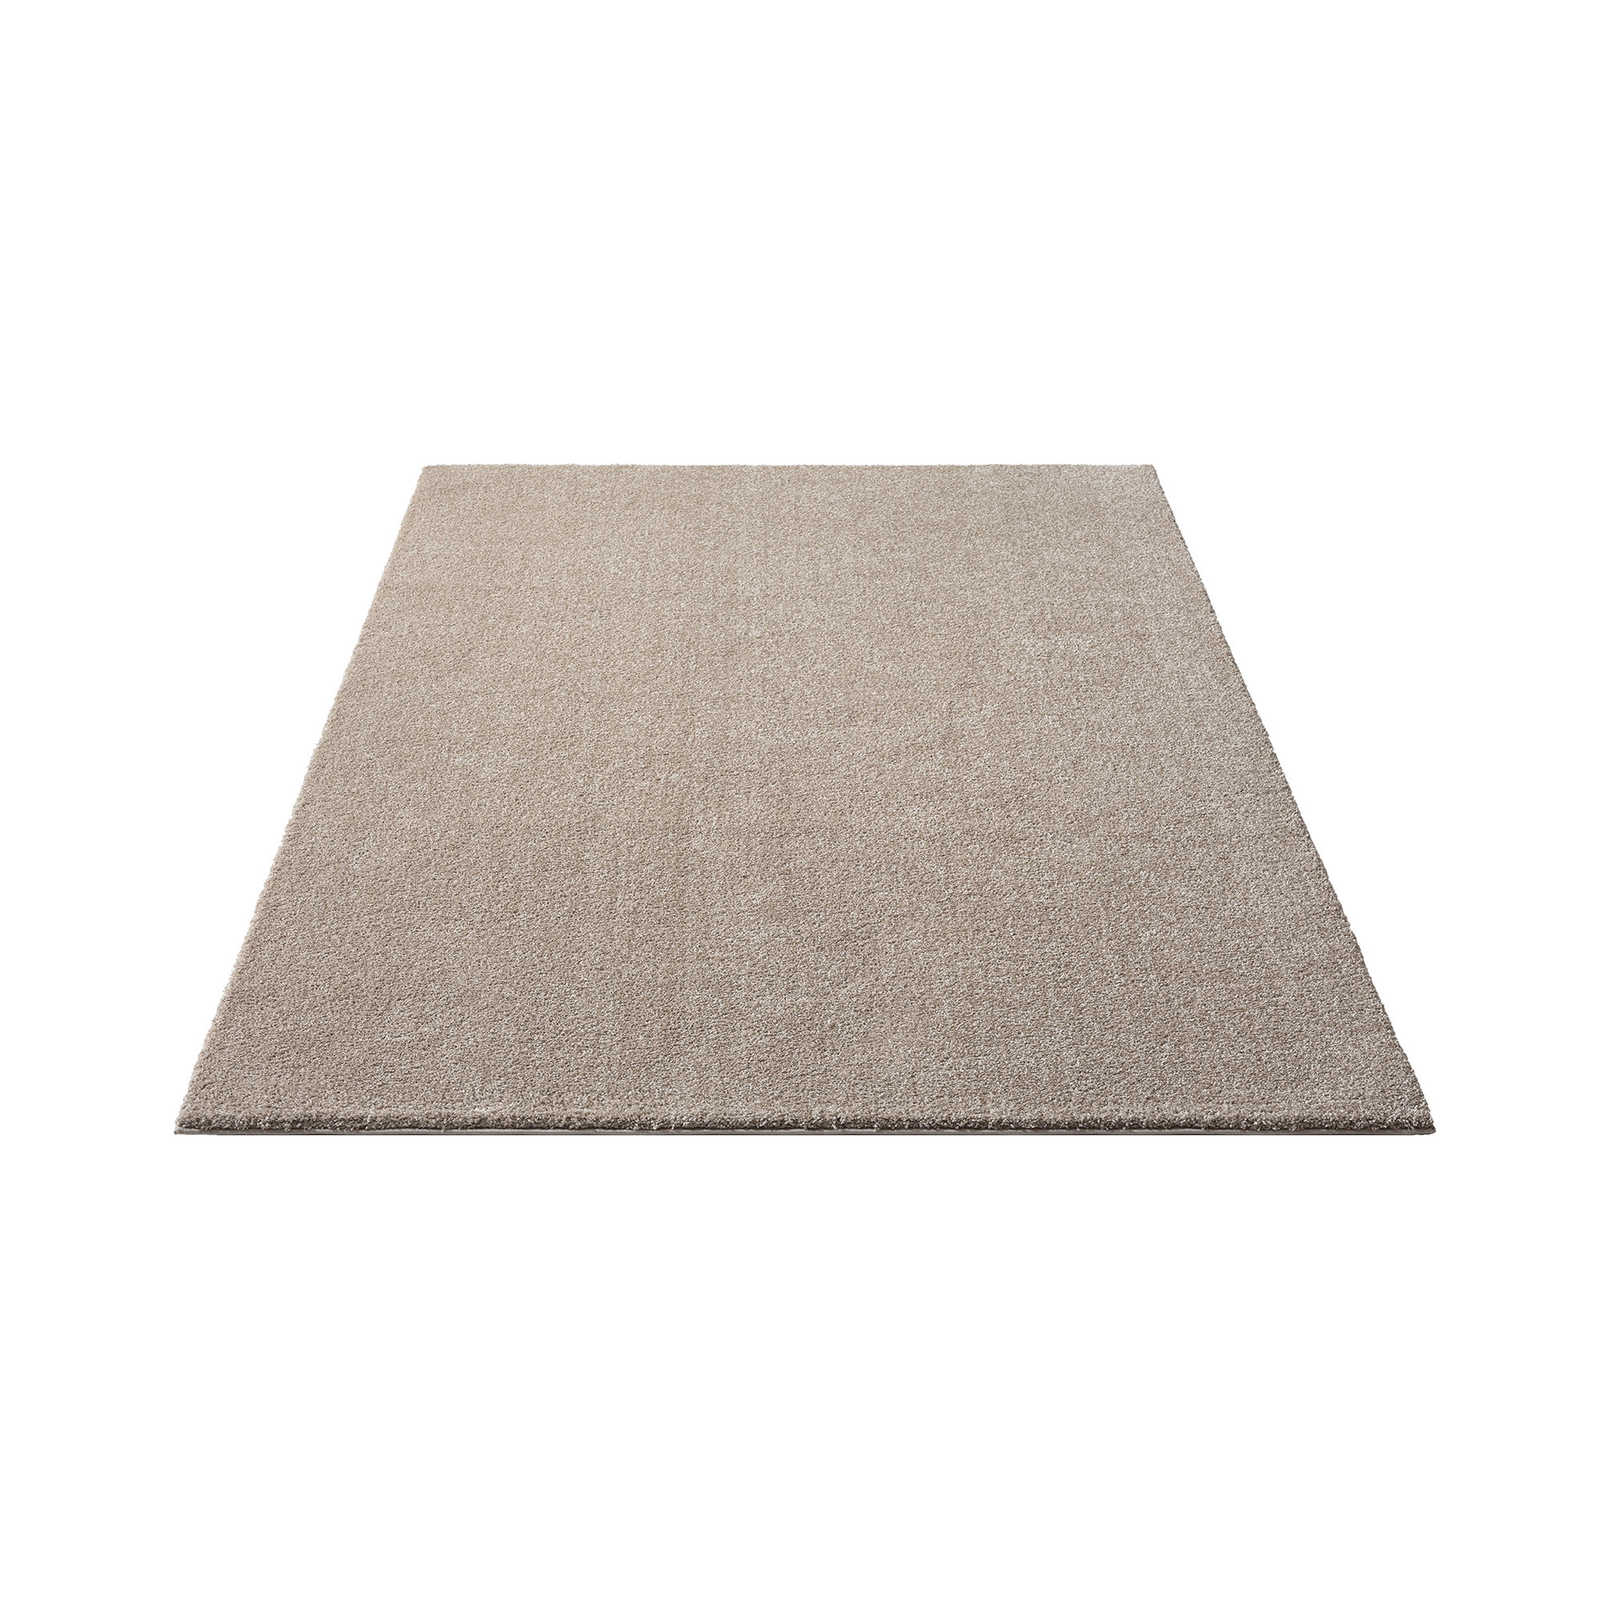 Soft short pile carpet in beige - 230 x 160 cm
